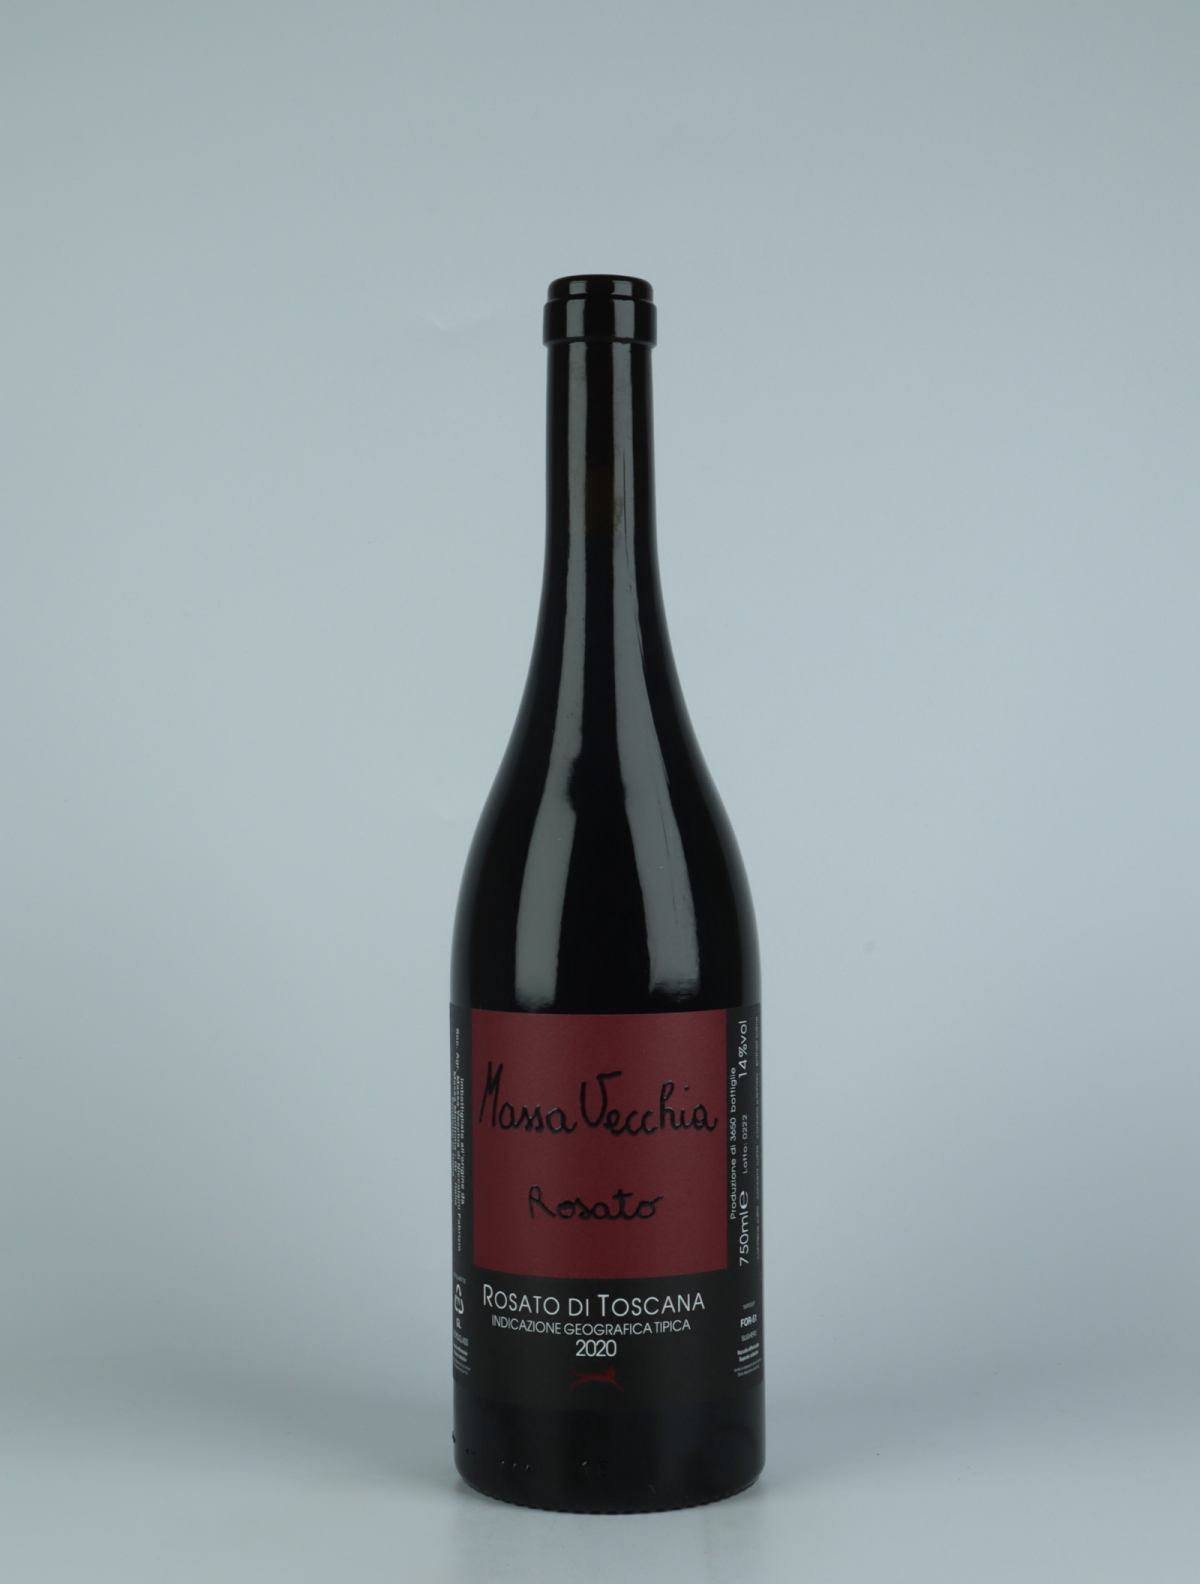 A bottle 2020 Rosato Rosé from Massa Vecchia, Tuscany in Italy